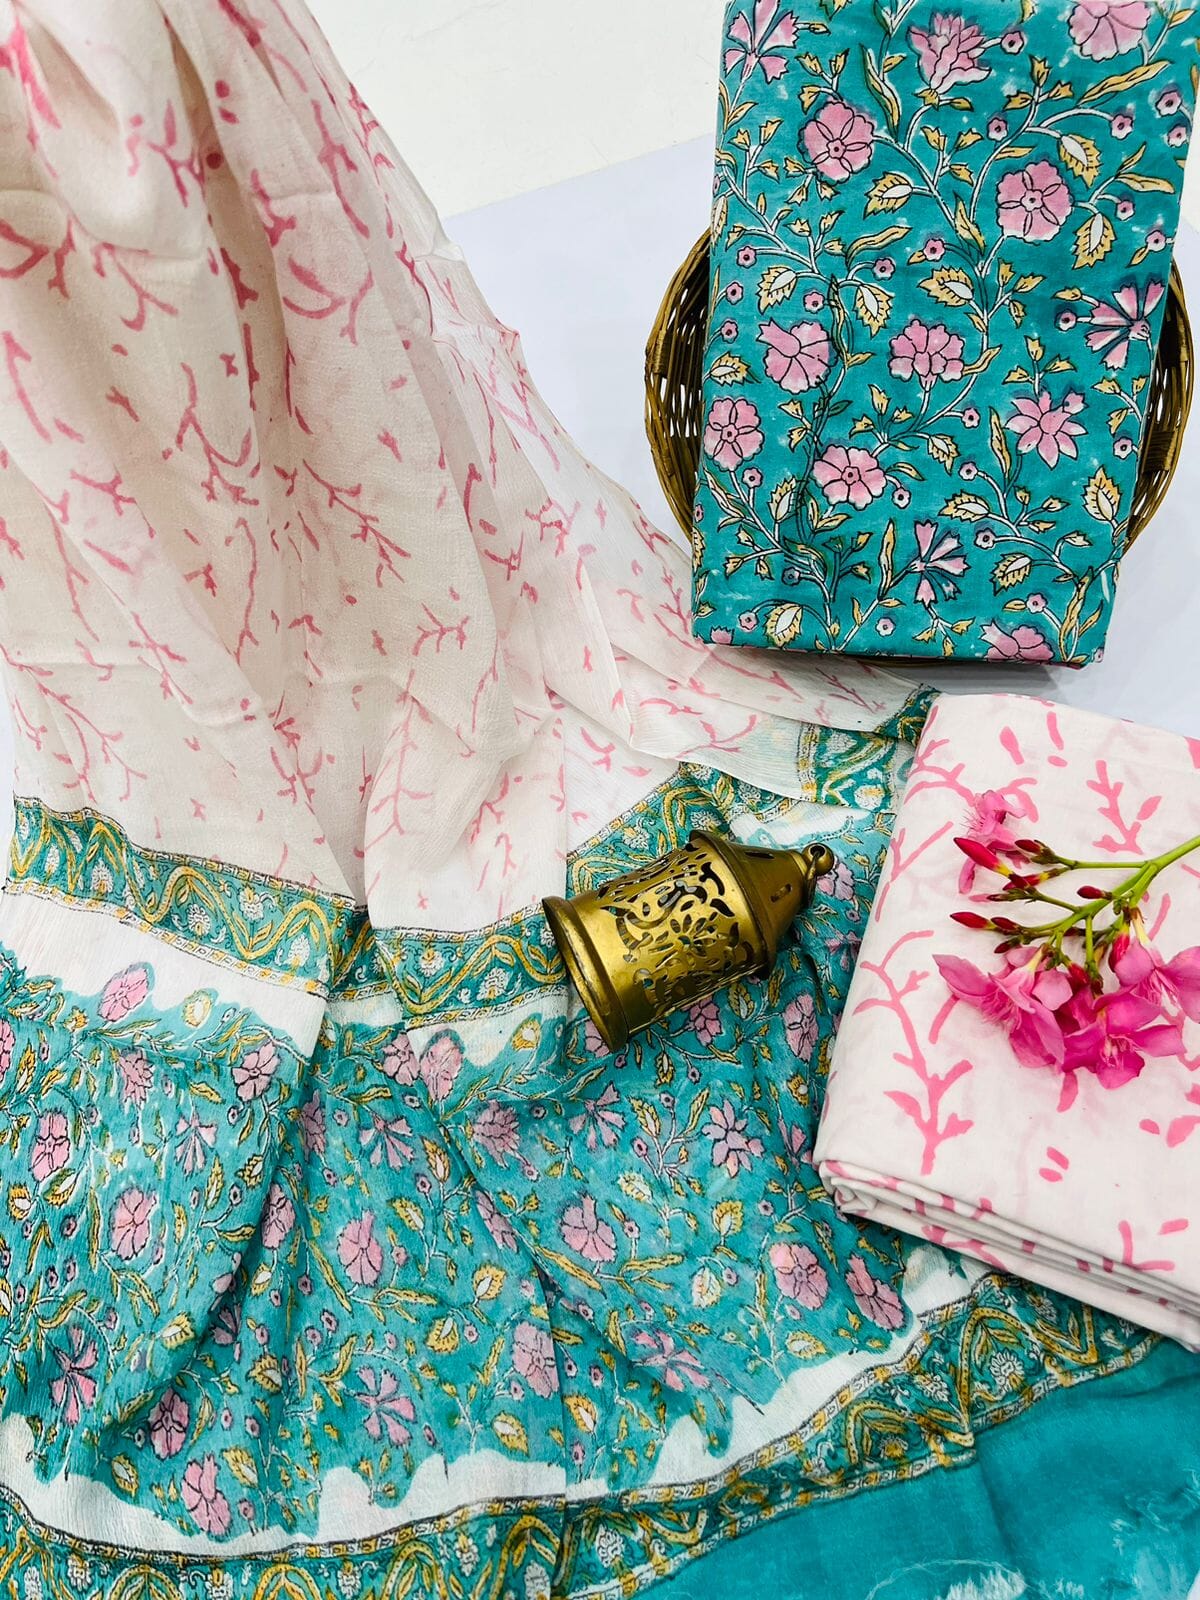 Cotton Block Print Dress Material with Chiffon Dupatta – RKG SHOPPING